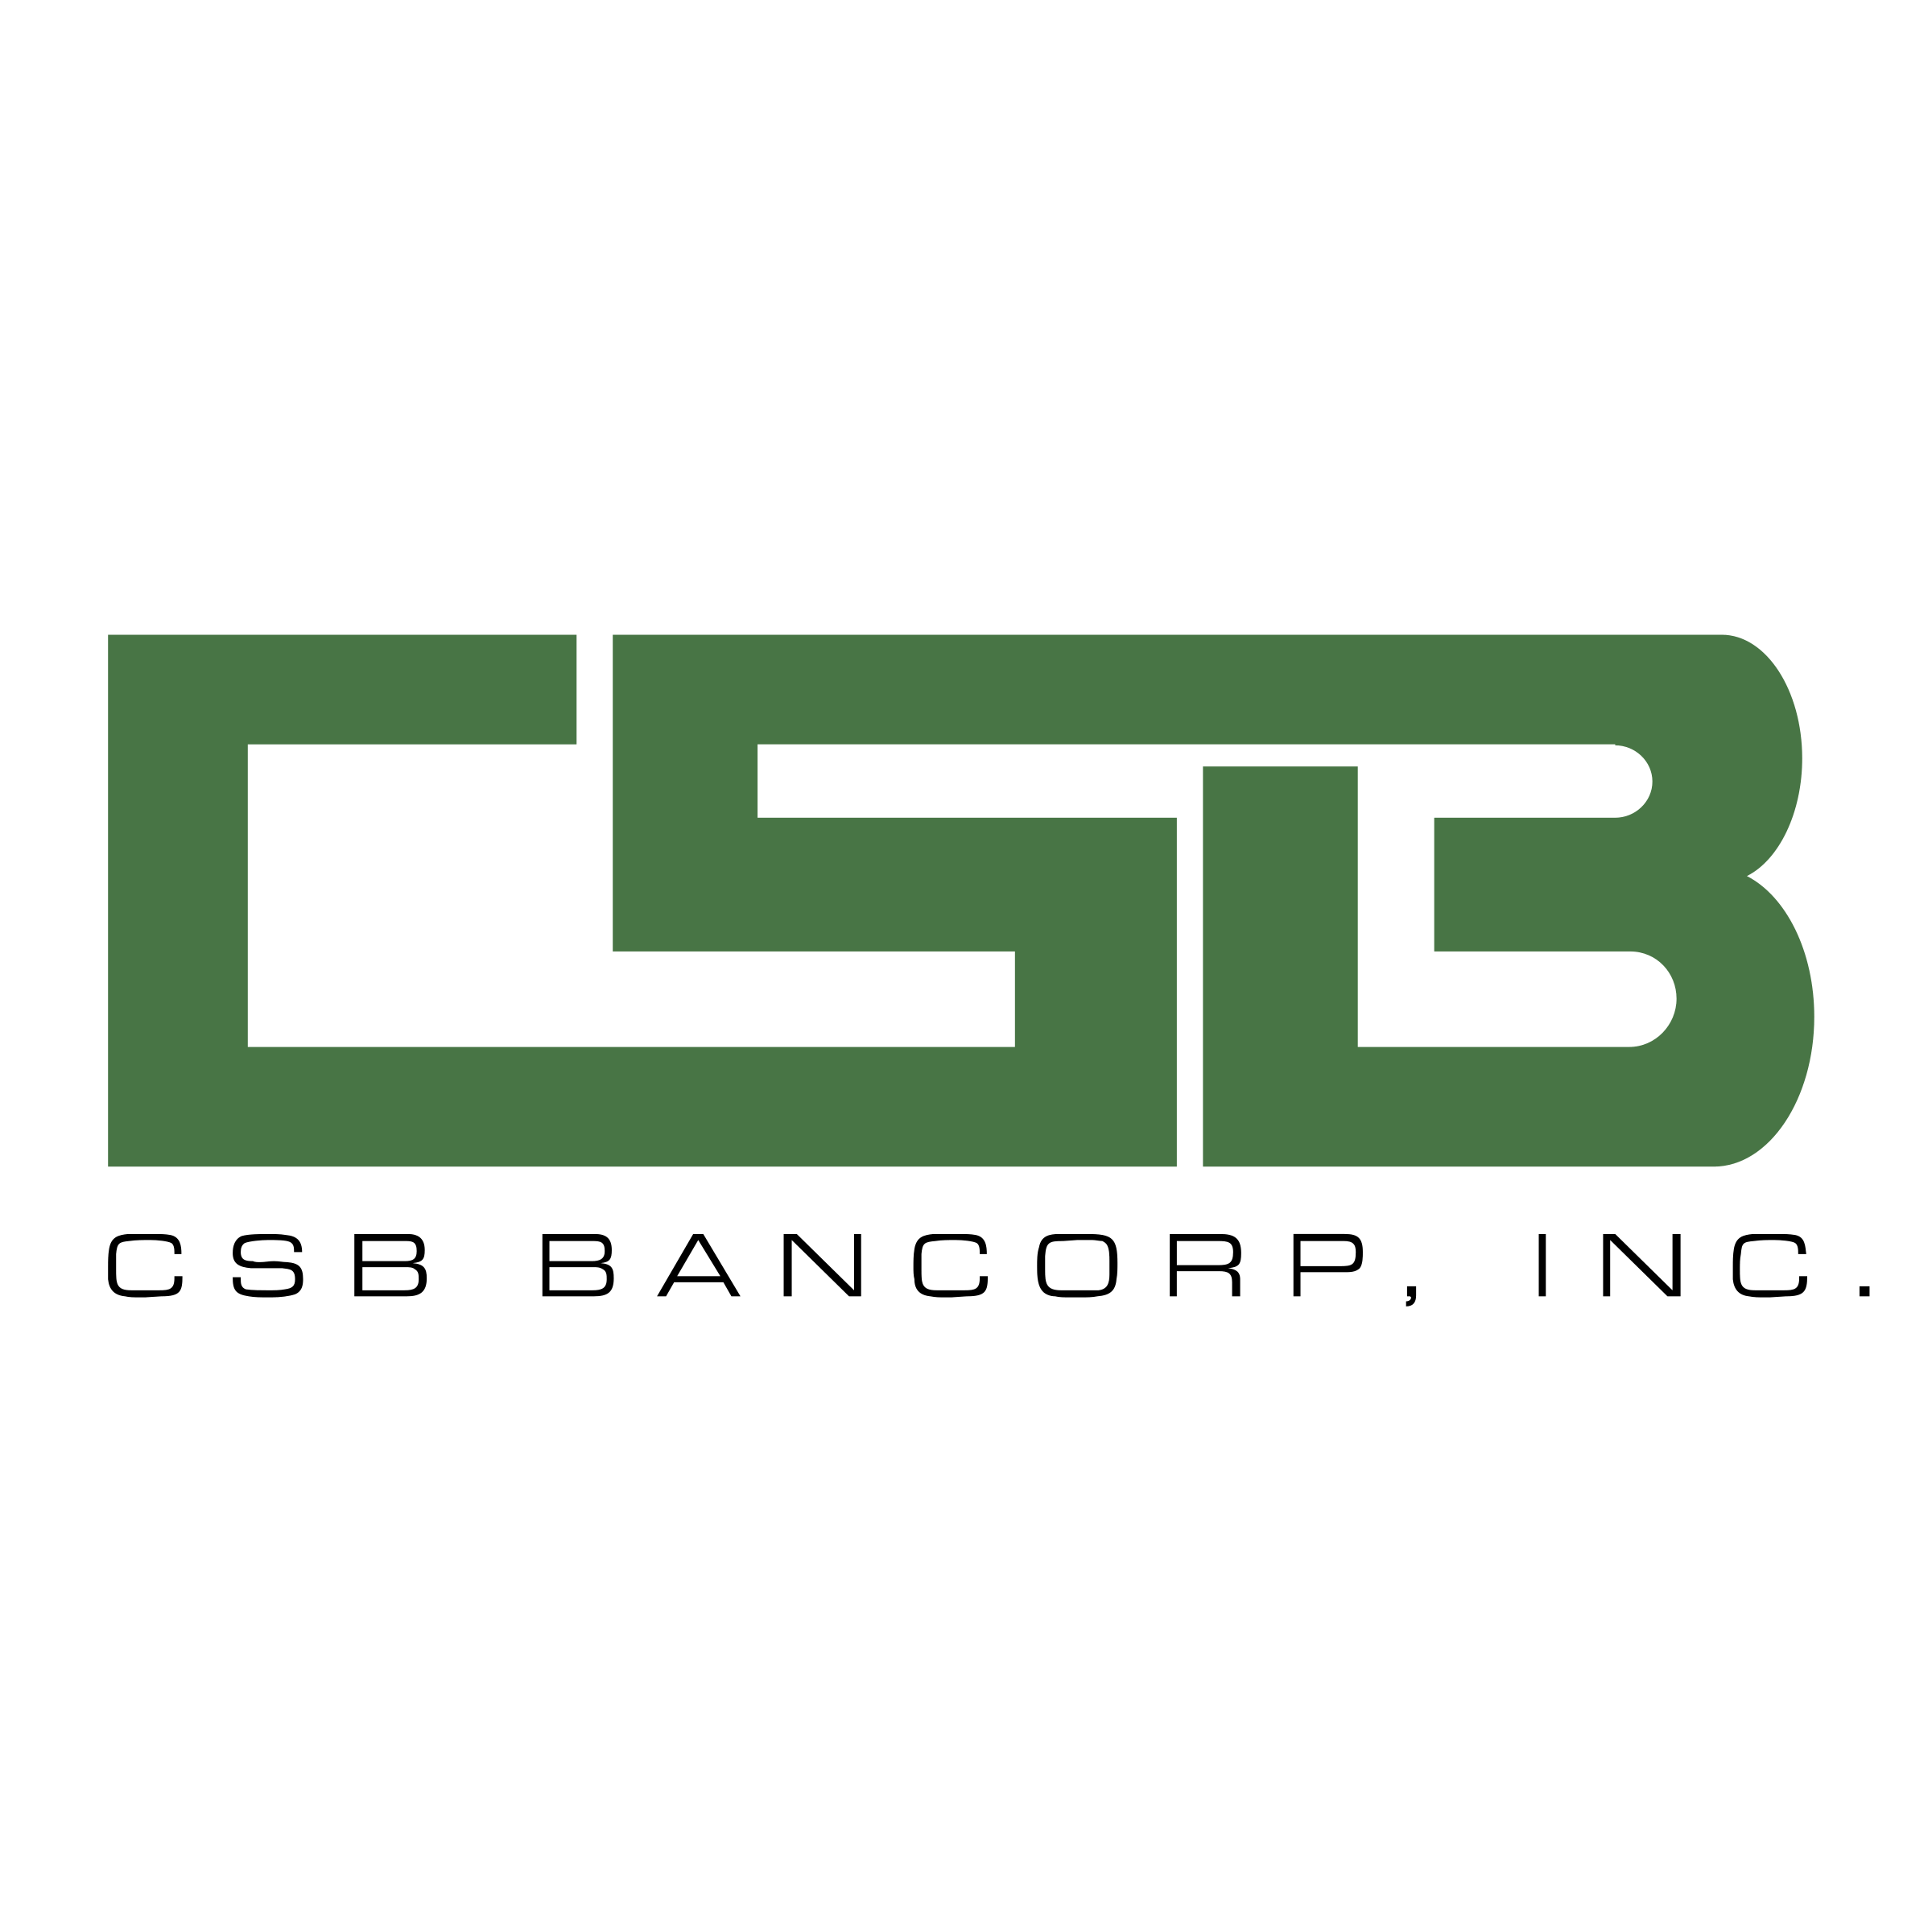 Bancorp Logo - CSB Bancorp Logo PNG Transparent & SVG Vector - Freebie Supply